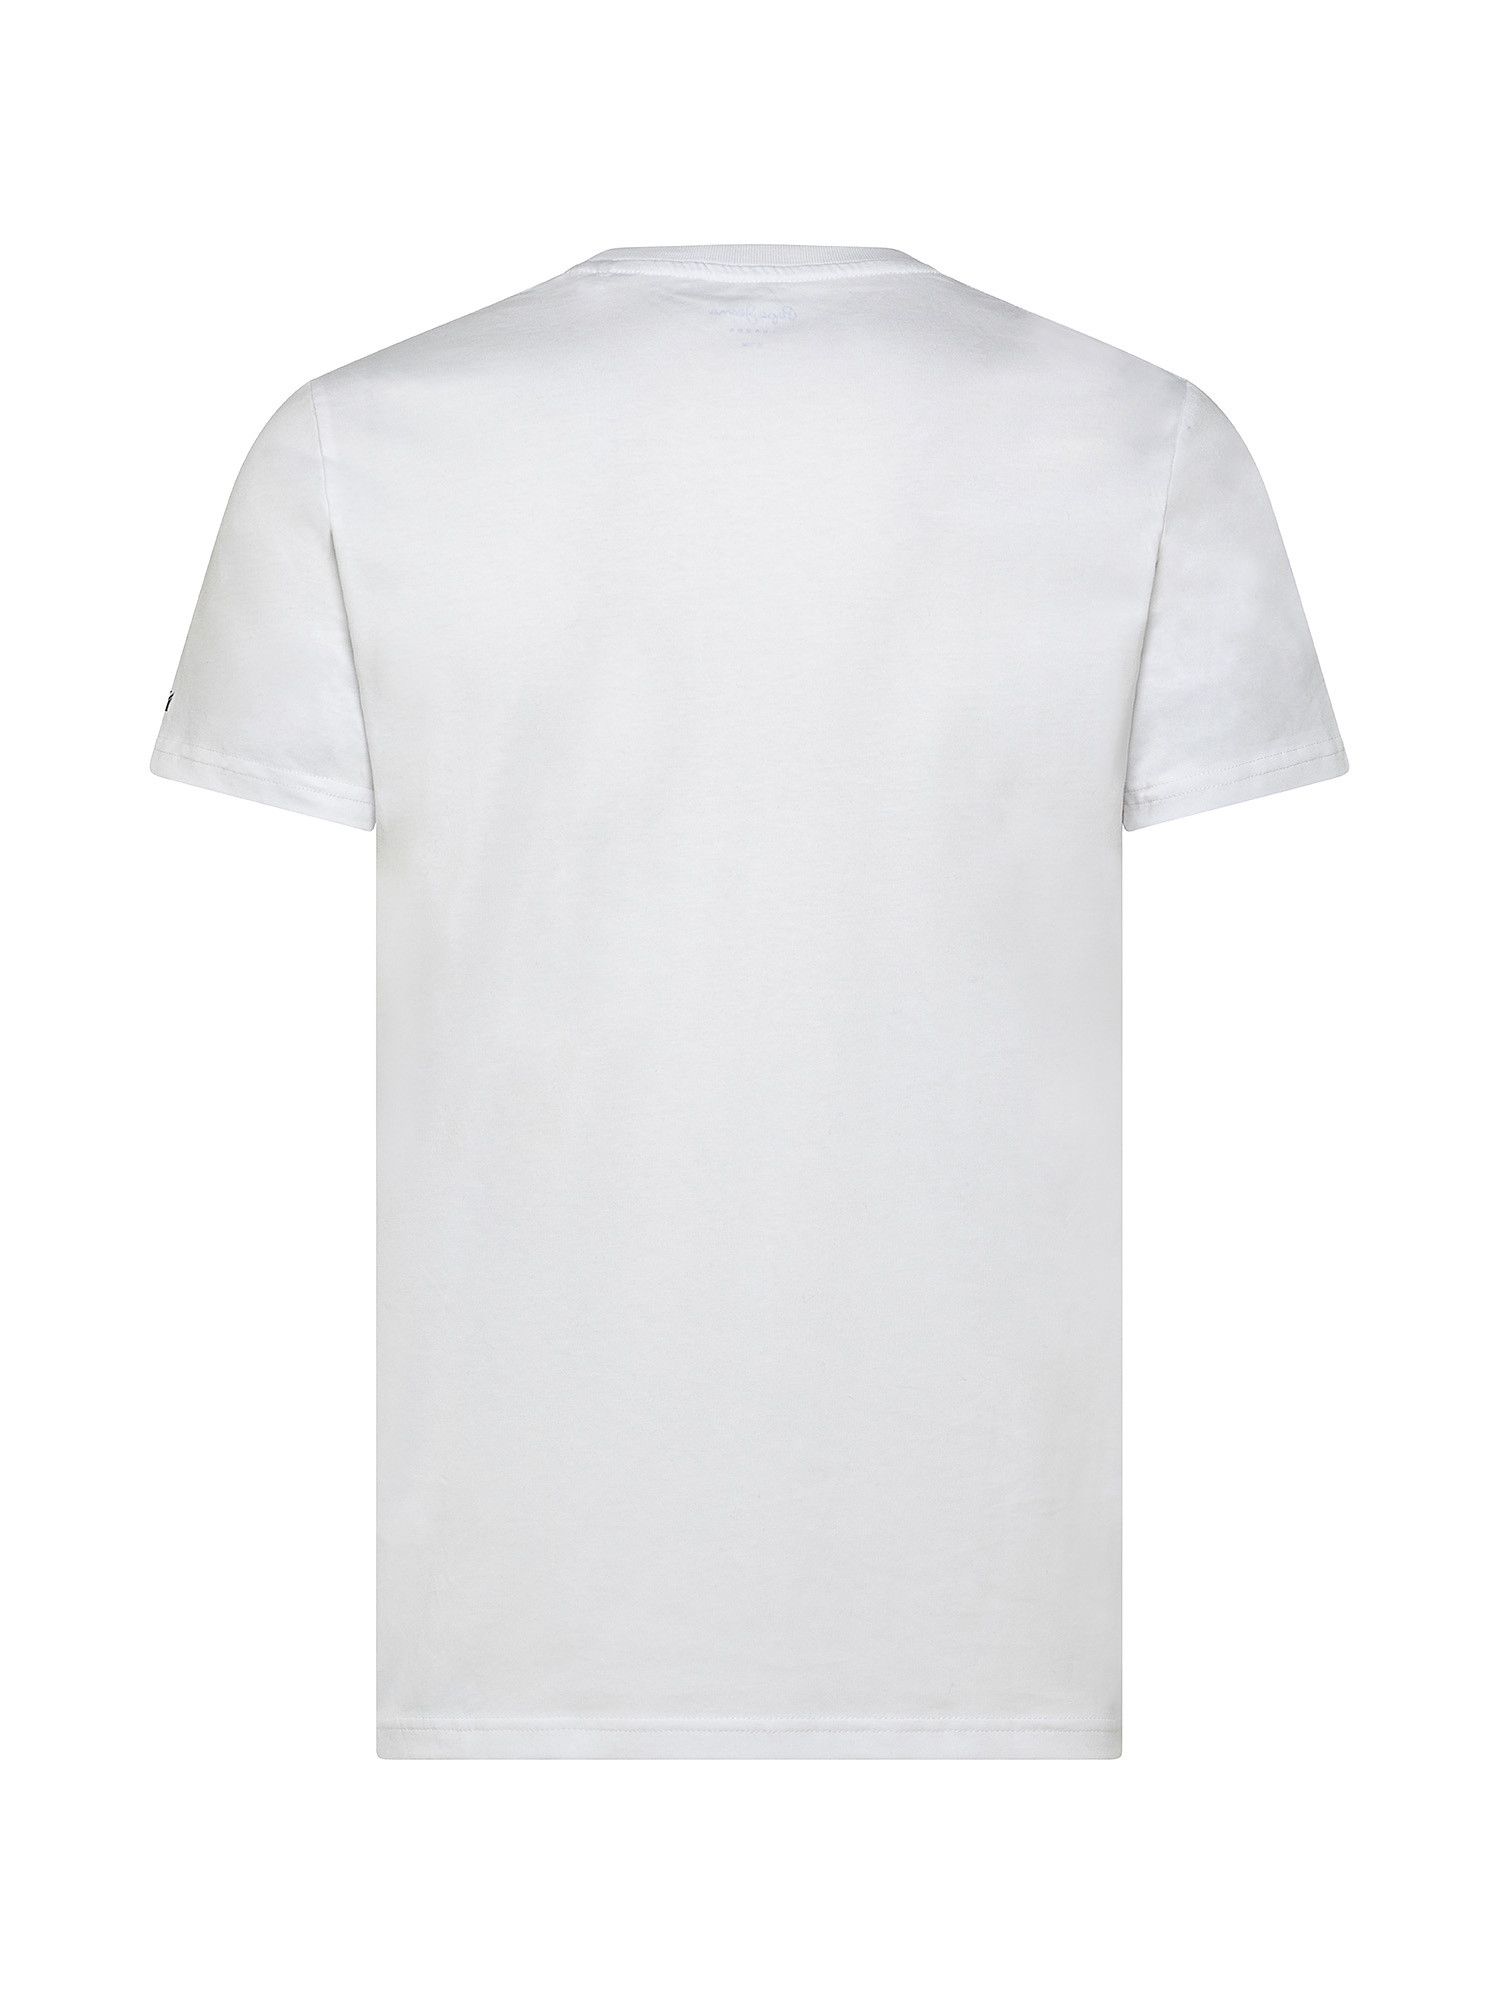 Santino cotton t-shirt, White, large image number 1